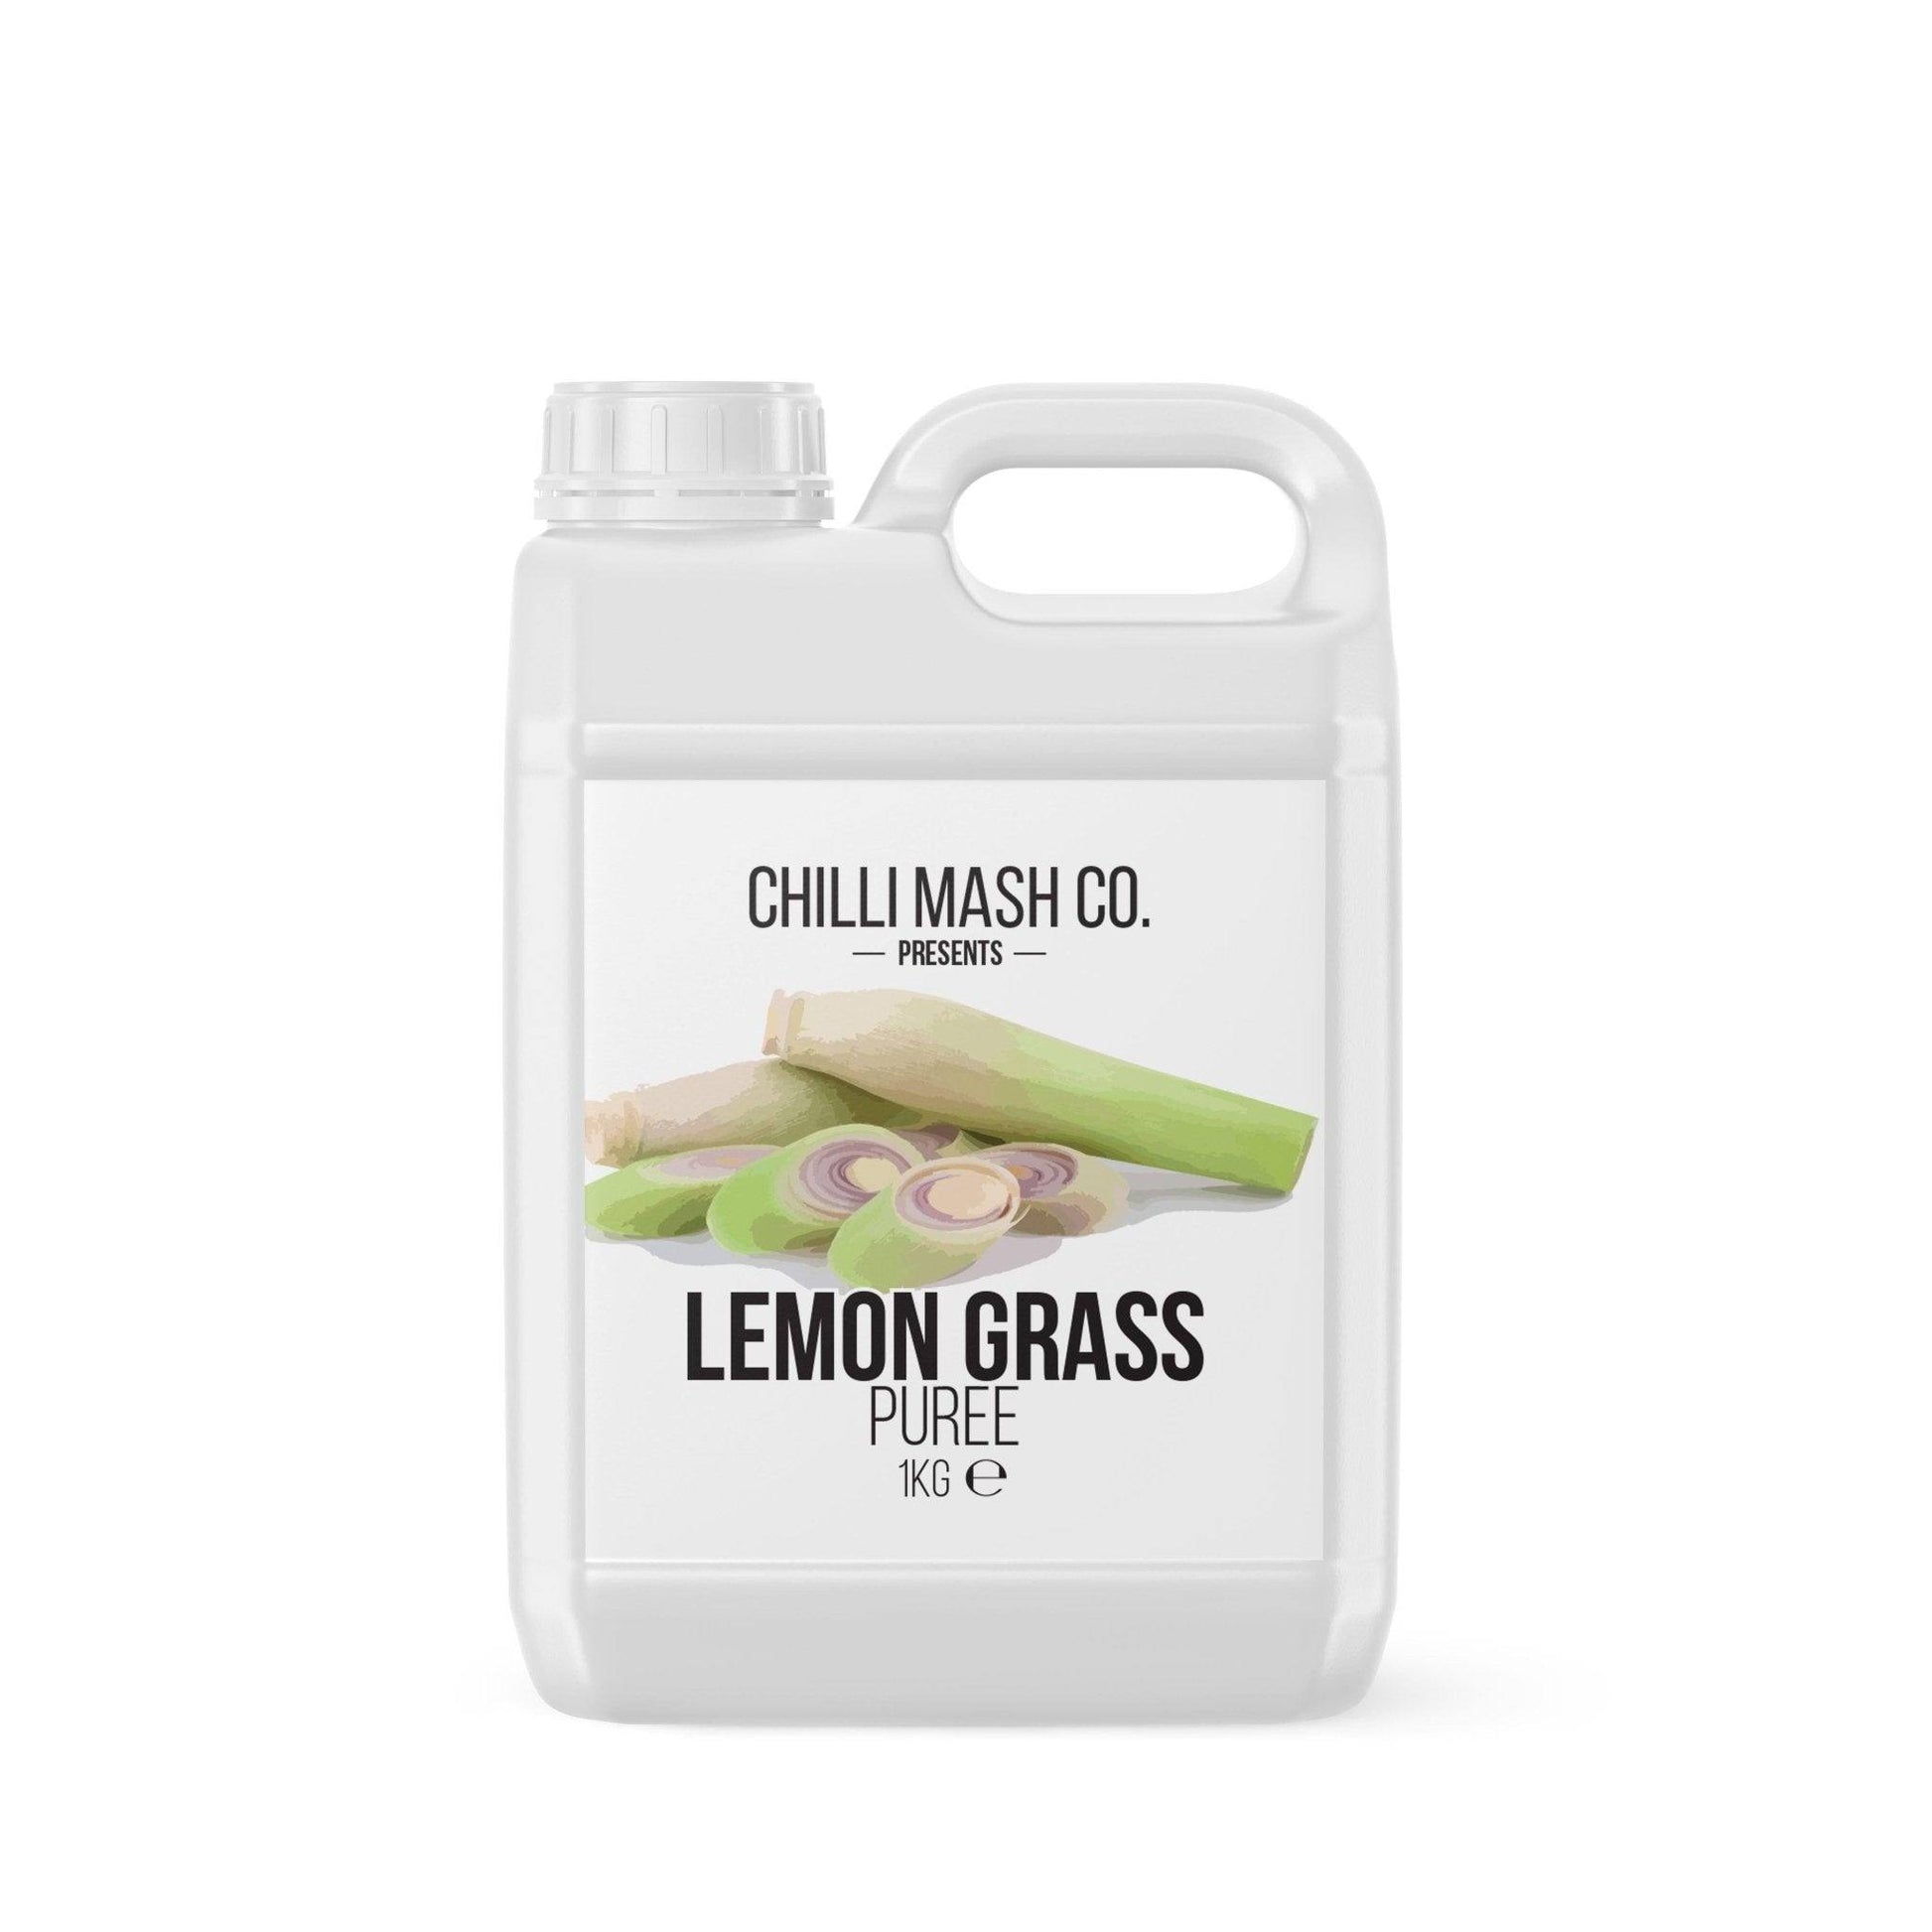 Lemongrass Puree | 1kg | Chilli Mash Co. - One Stop Chilli Shop